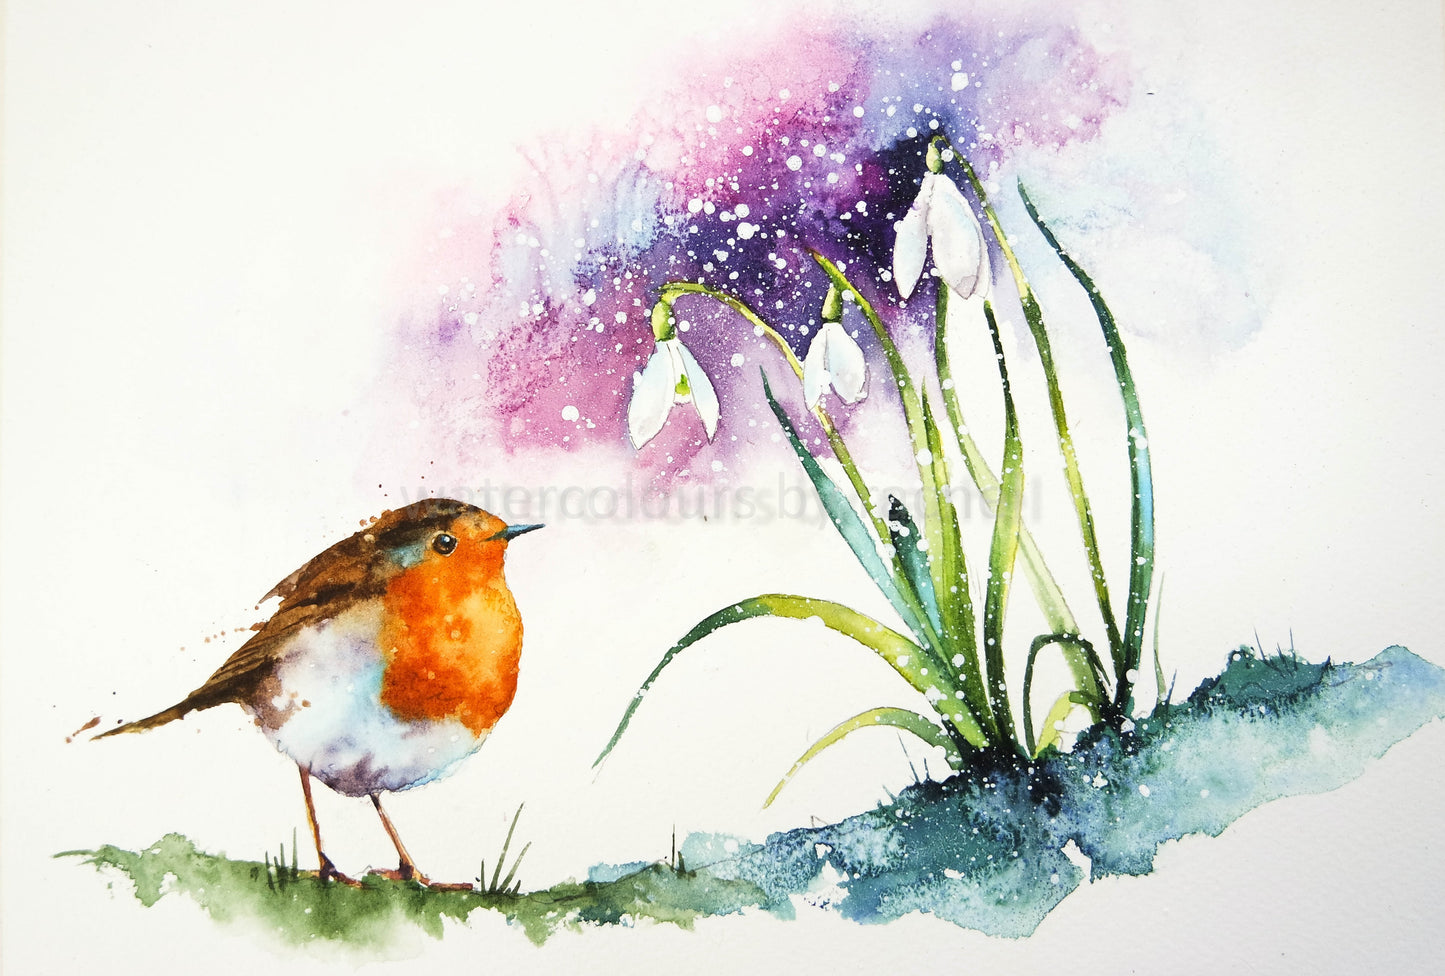 Snowdrops and a robin